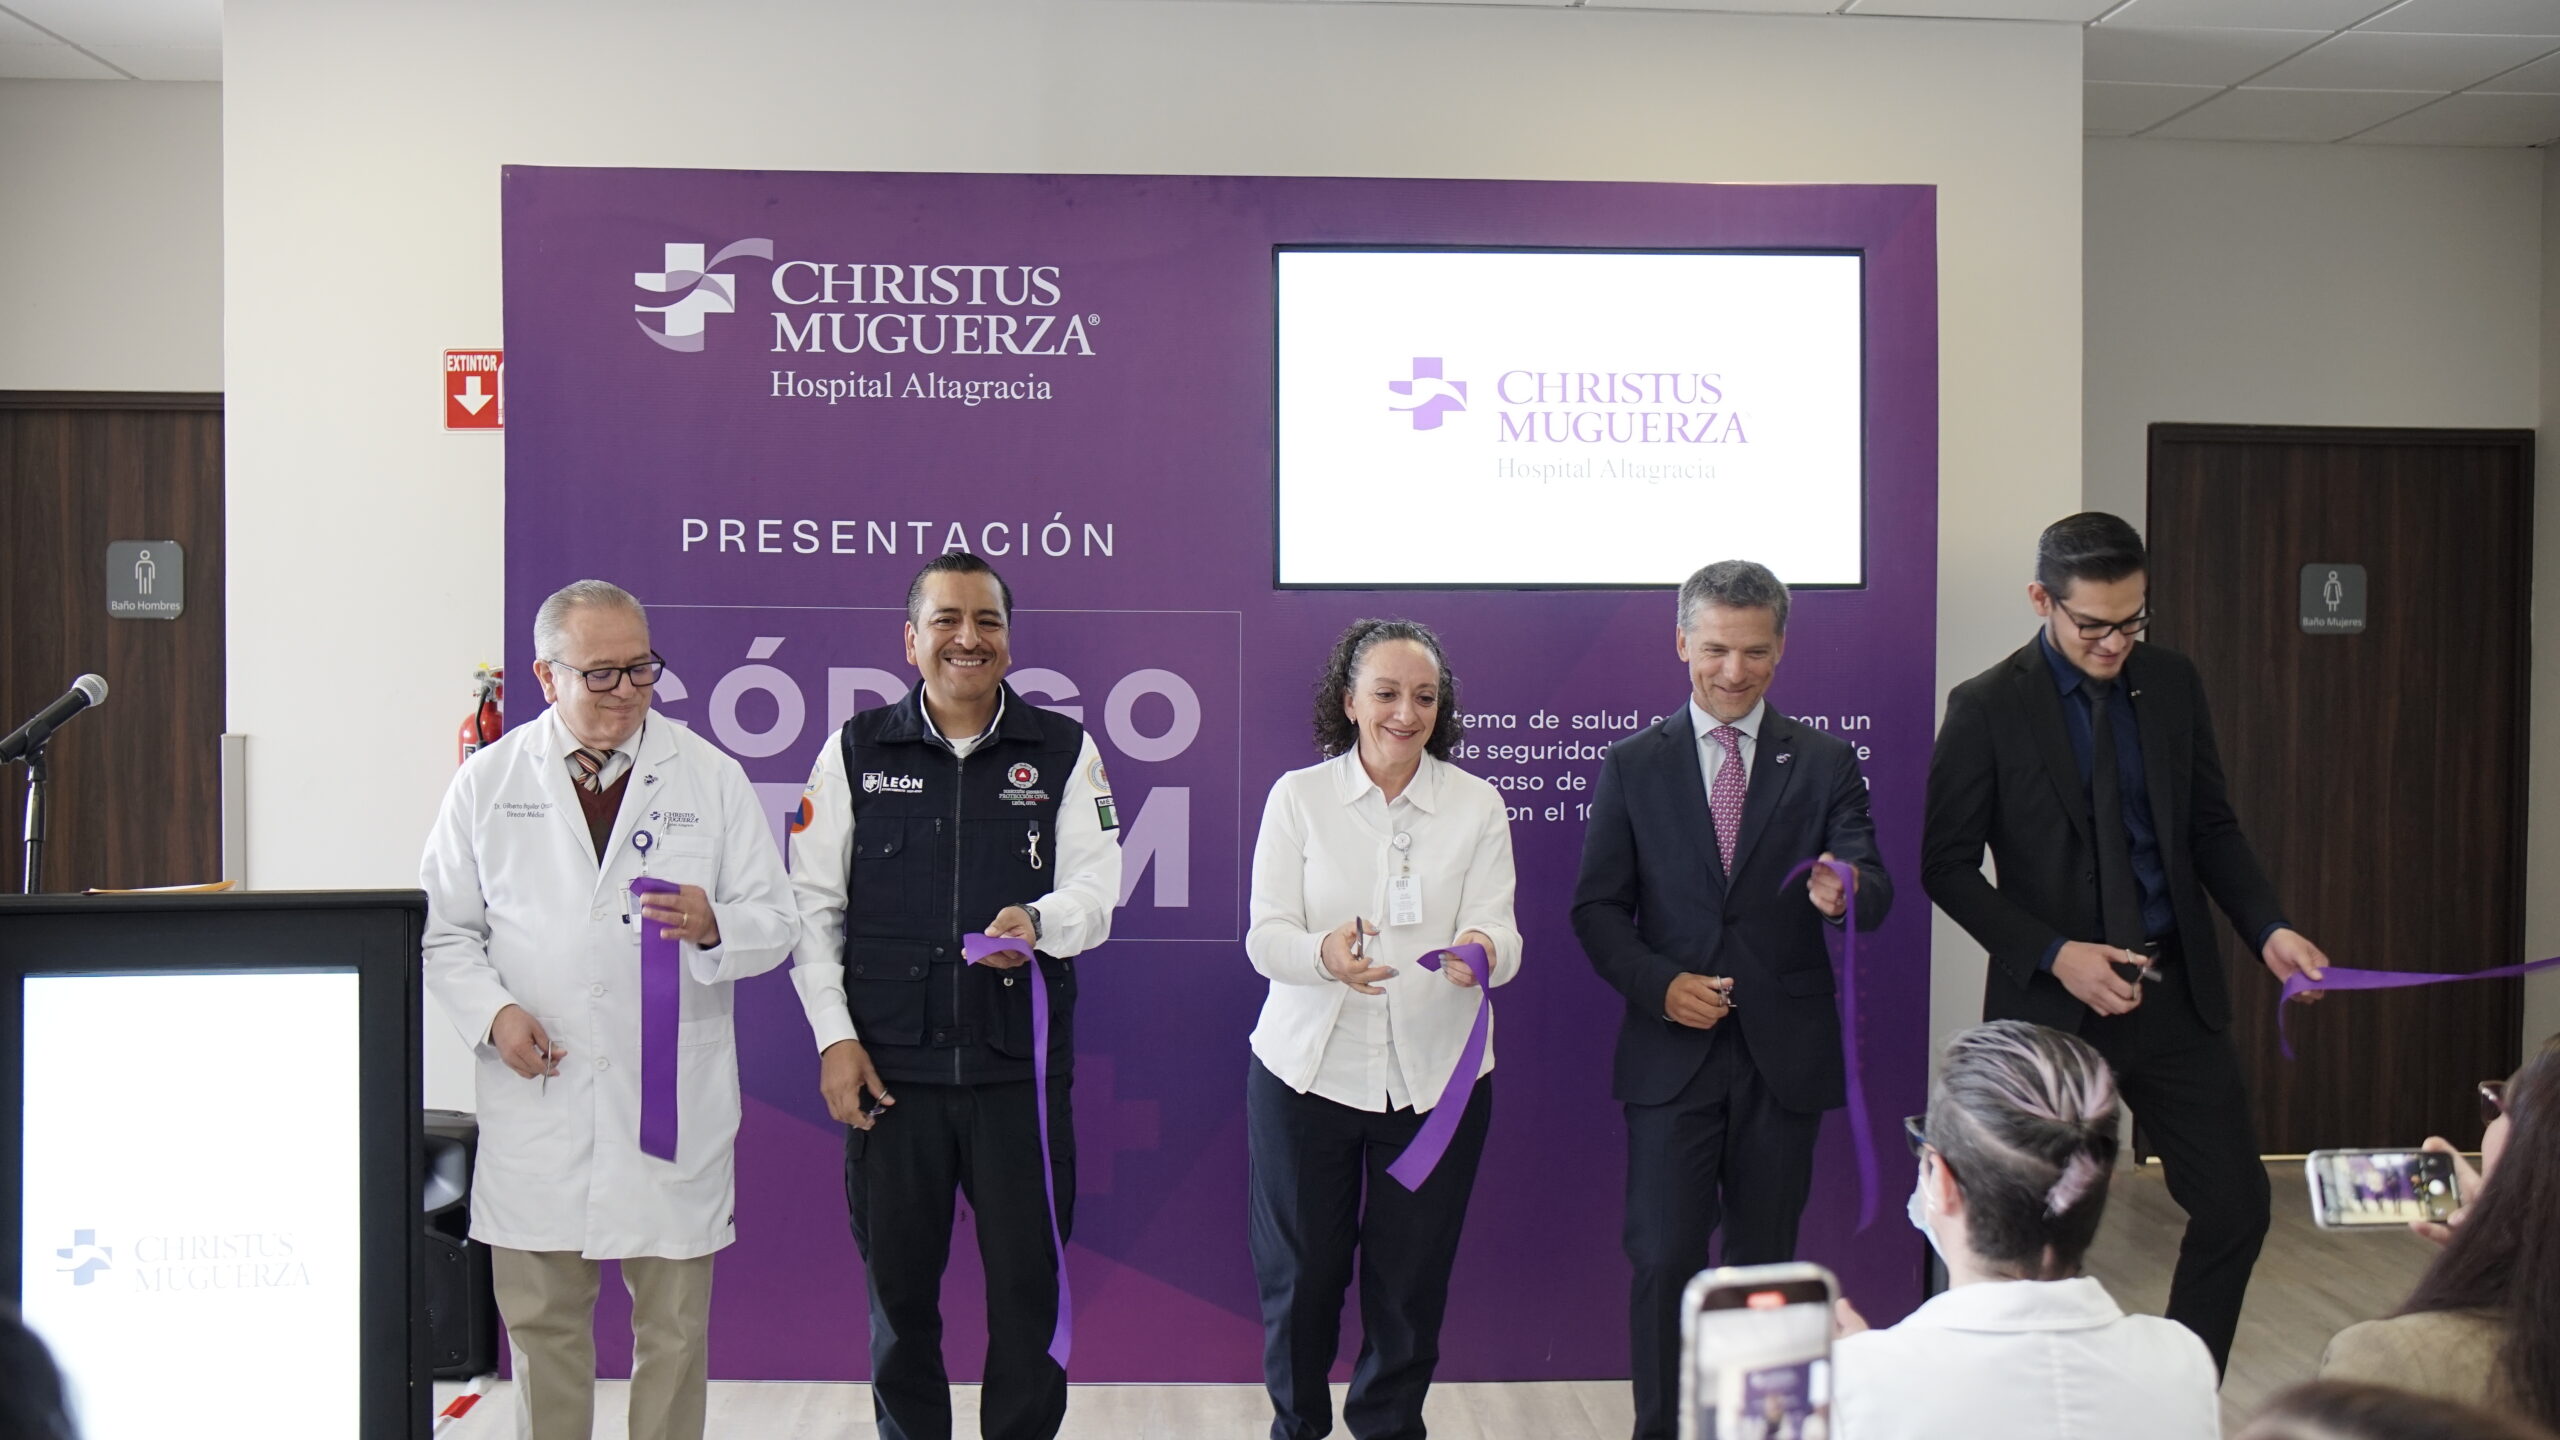 Presentan “CÓDIGO ADAM” en Hospital CHRISTUS MUGUERZA Altagracia